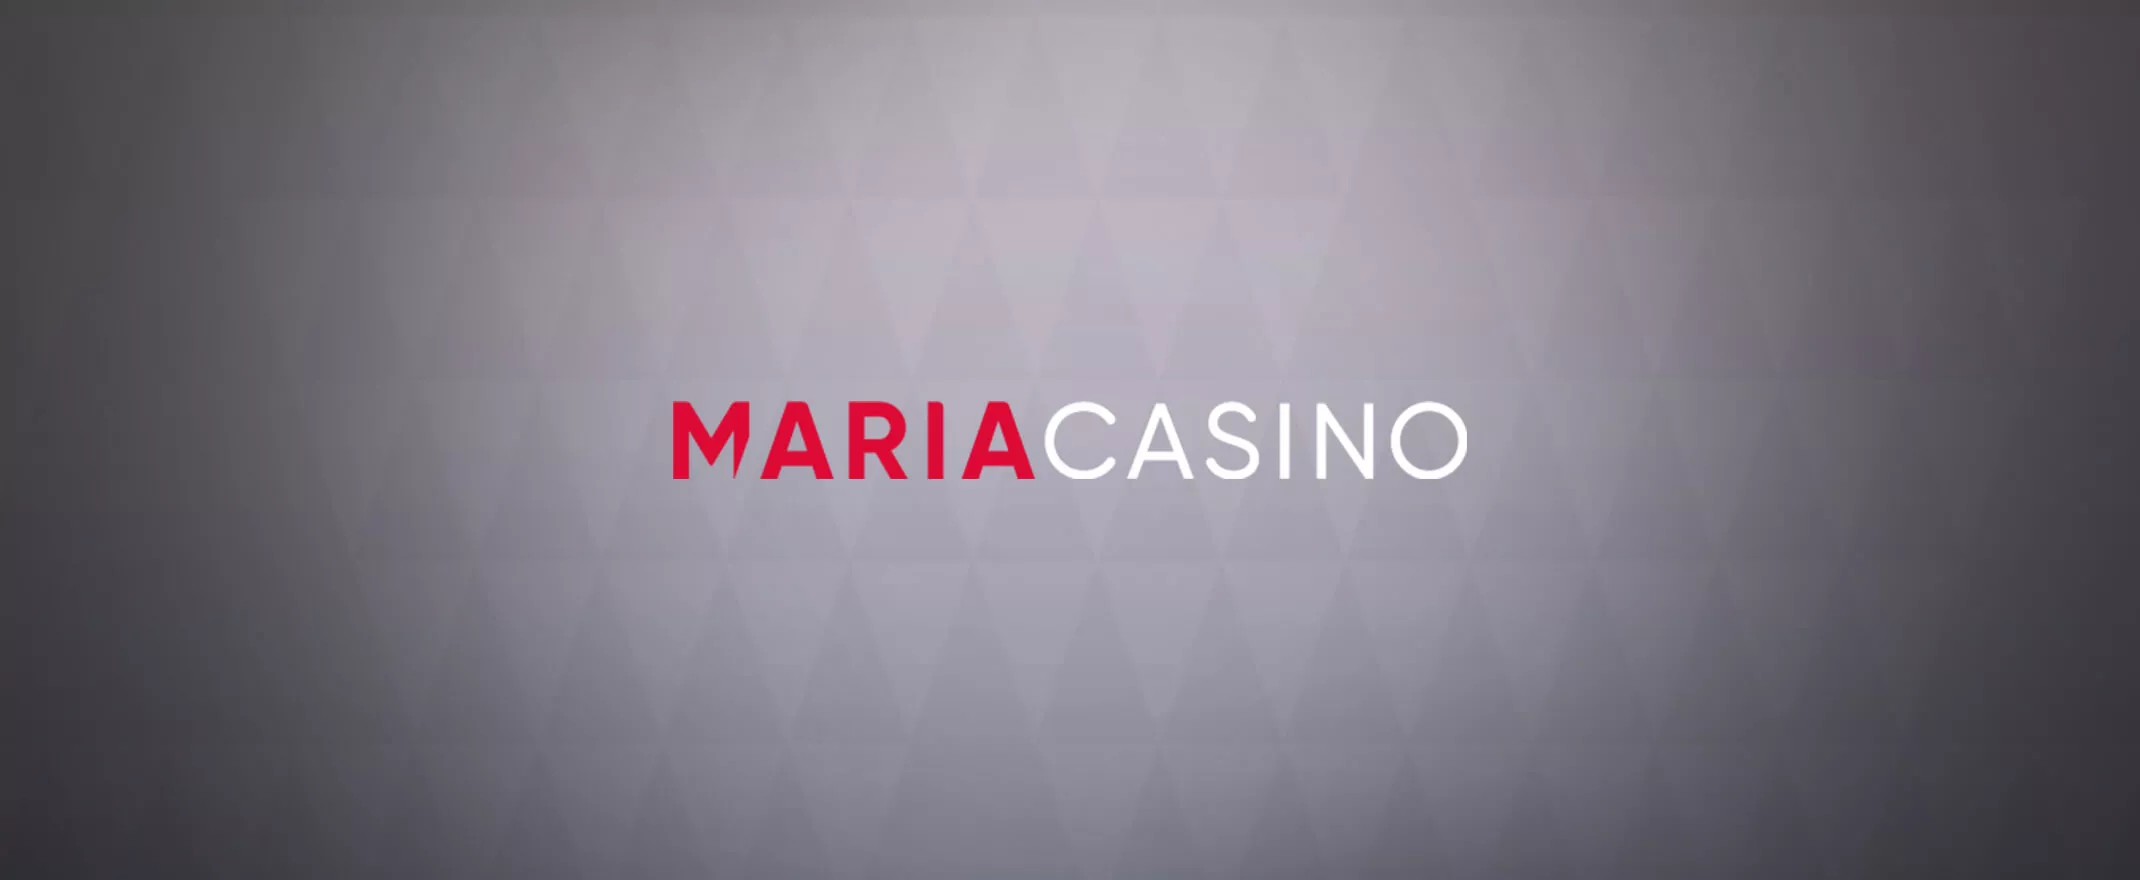 Maria Casino nyheter